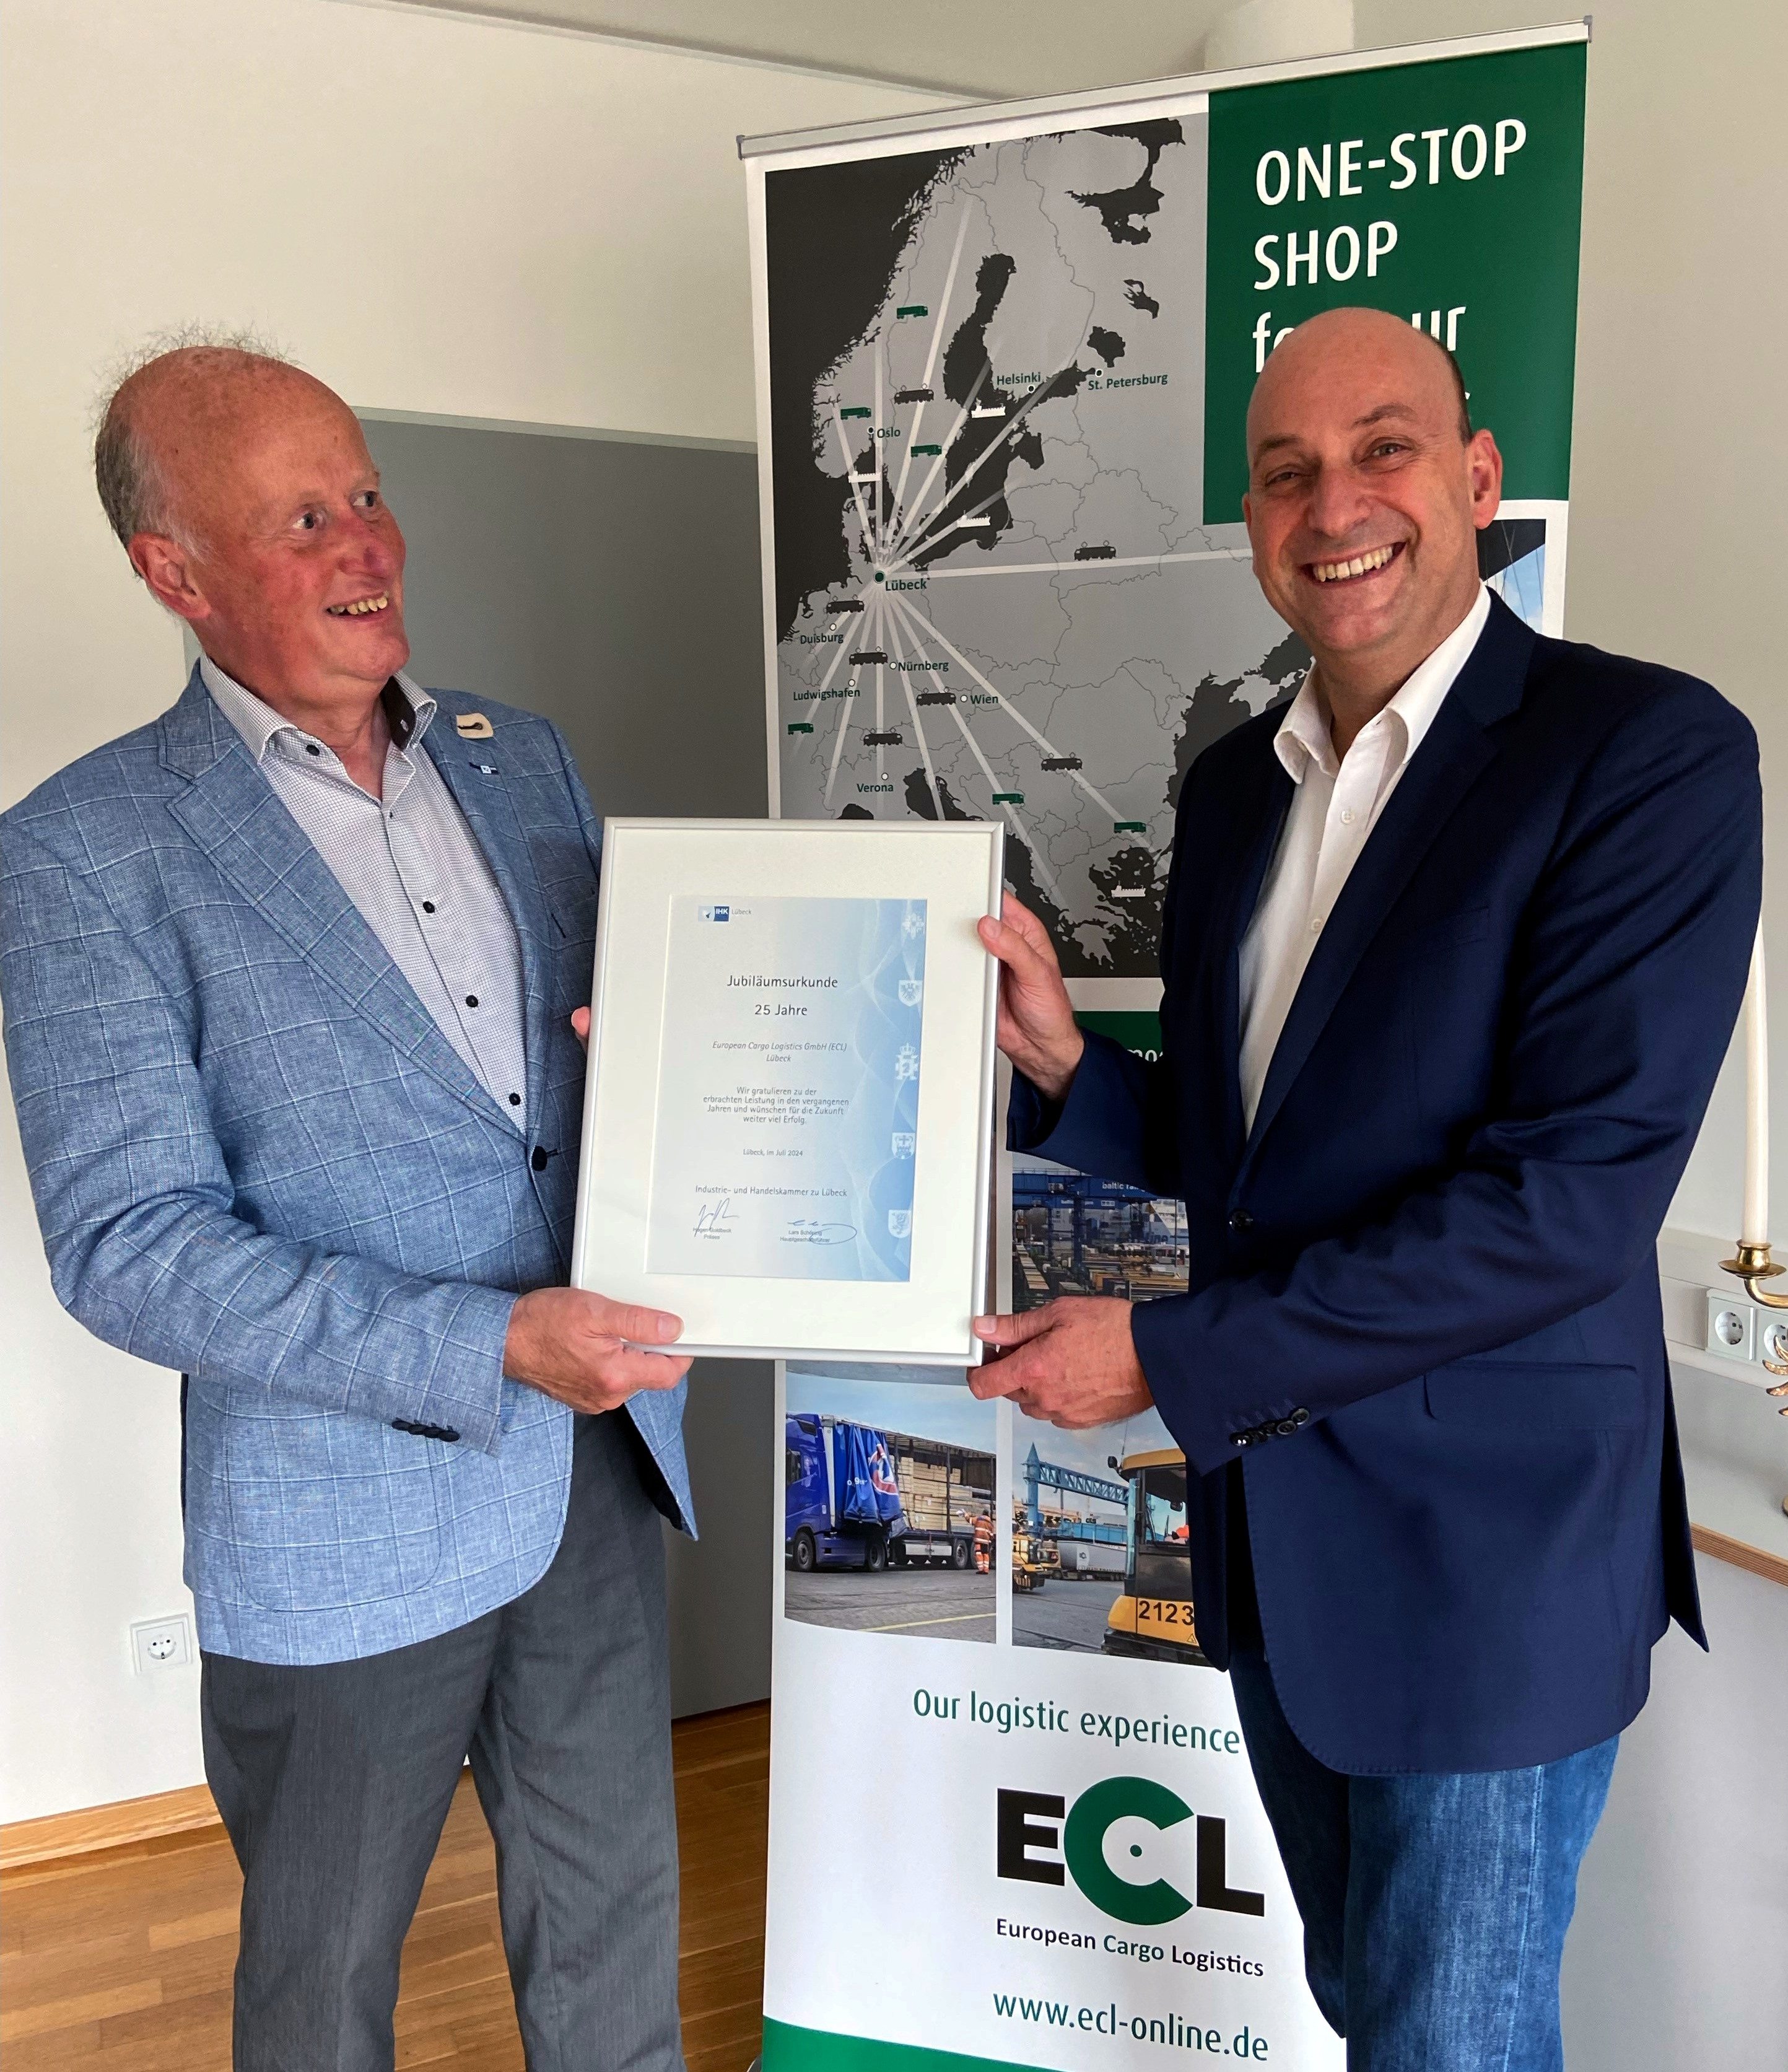 Lübeck forwarding company ECL celebrates its 25th anniversary